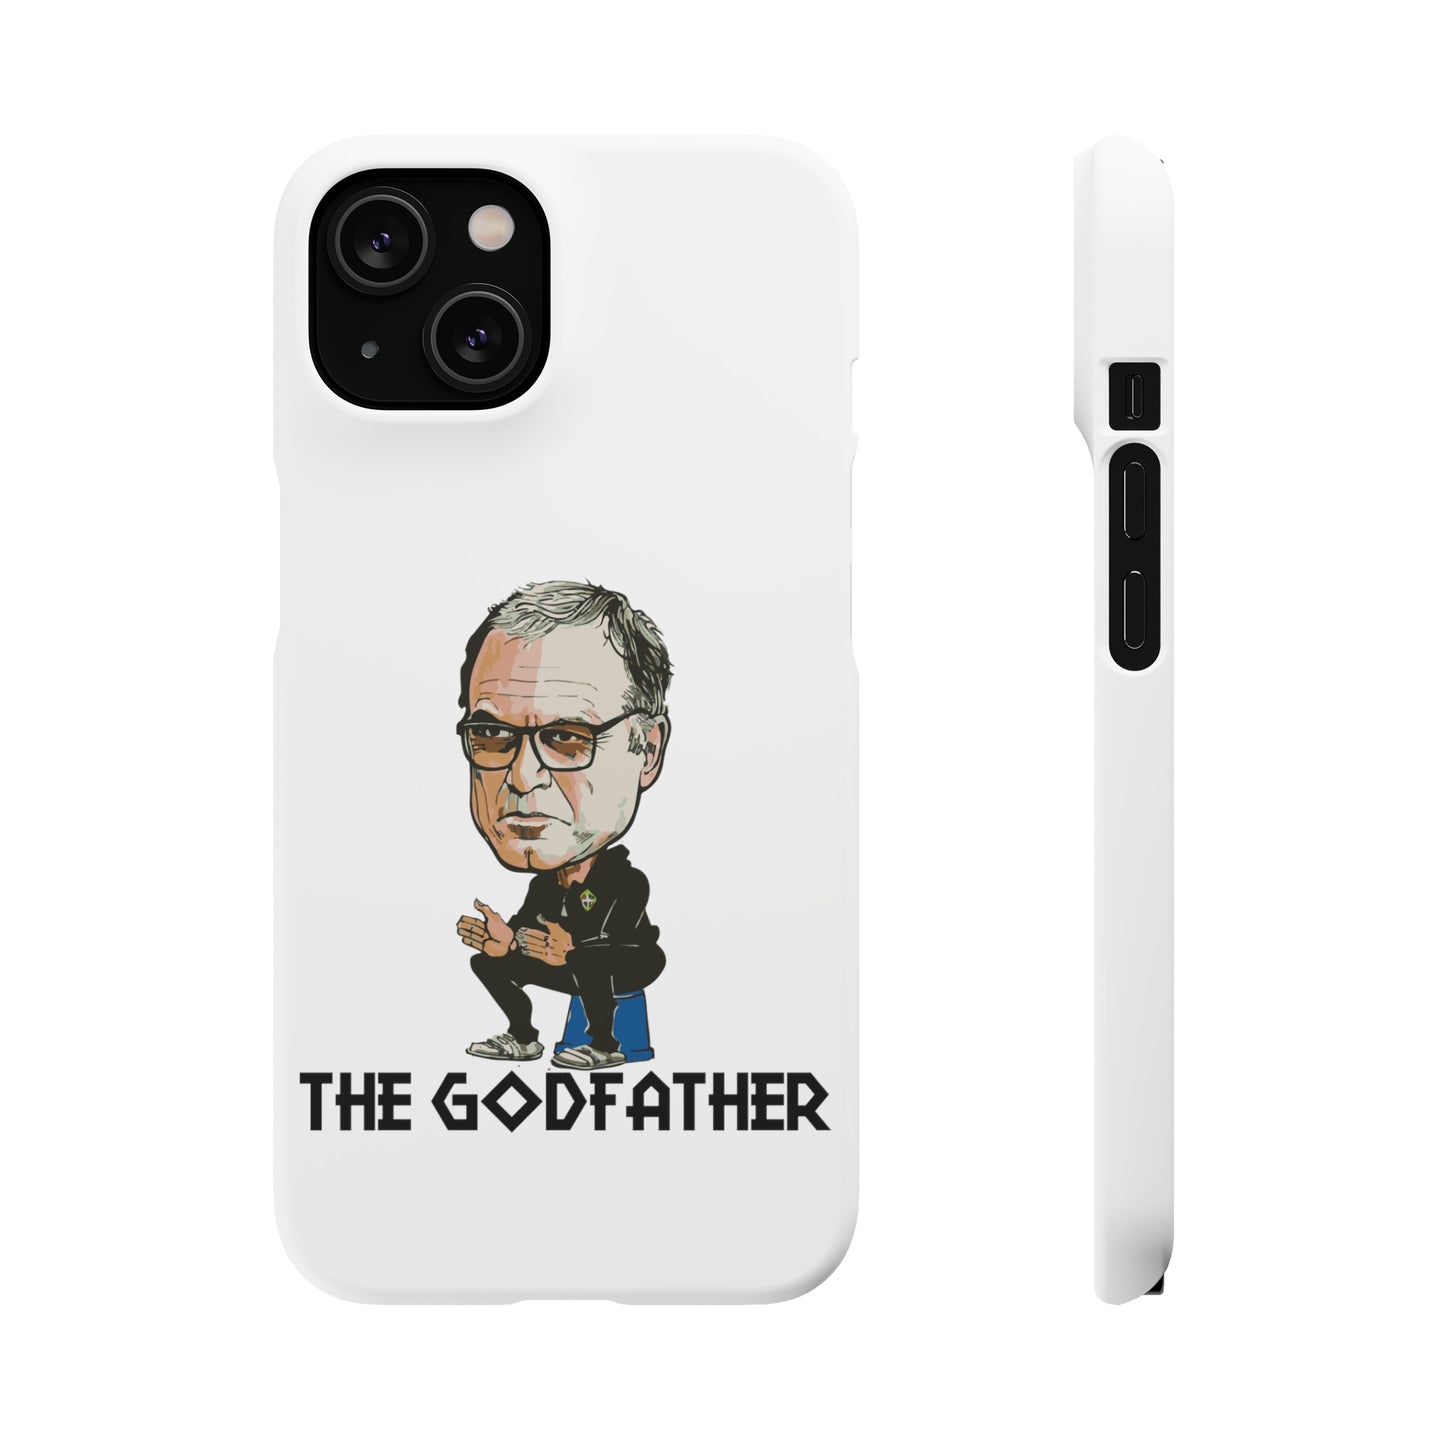 Snap Cases - Bielsa the Godfather